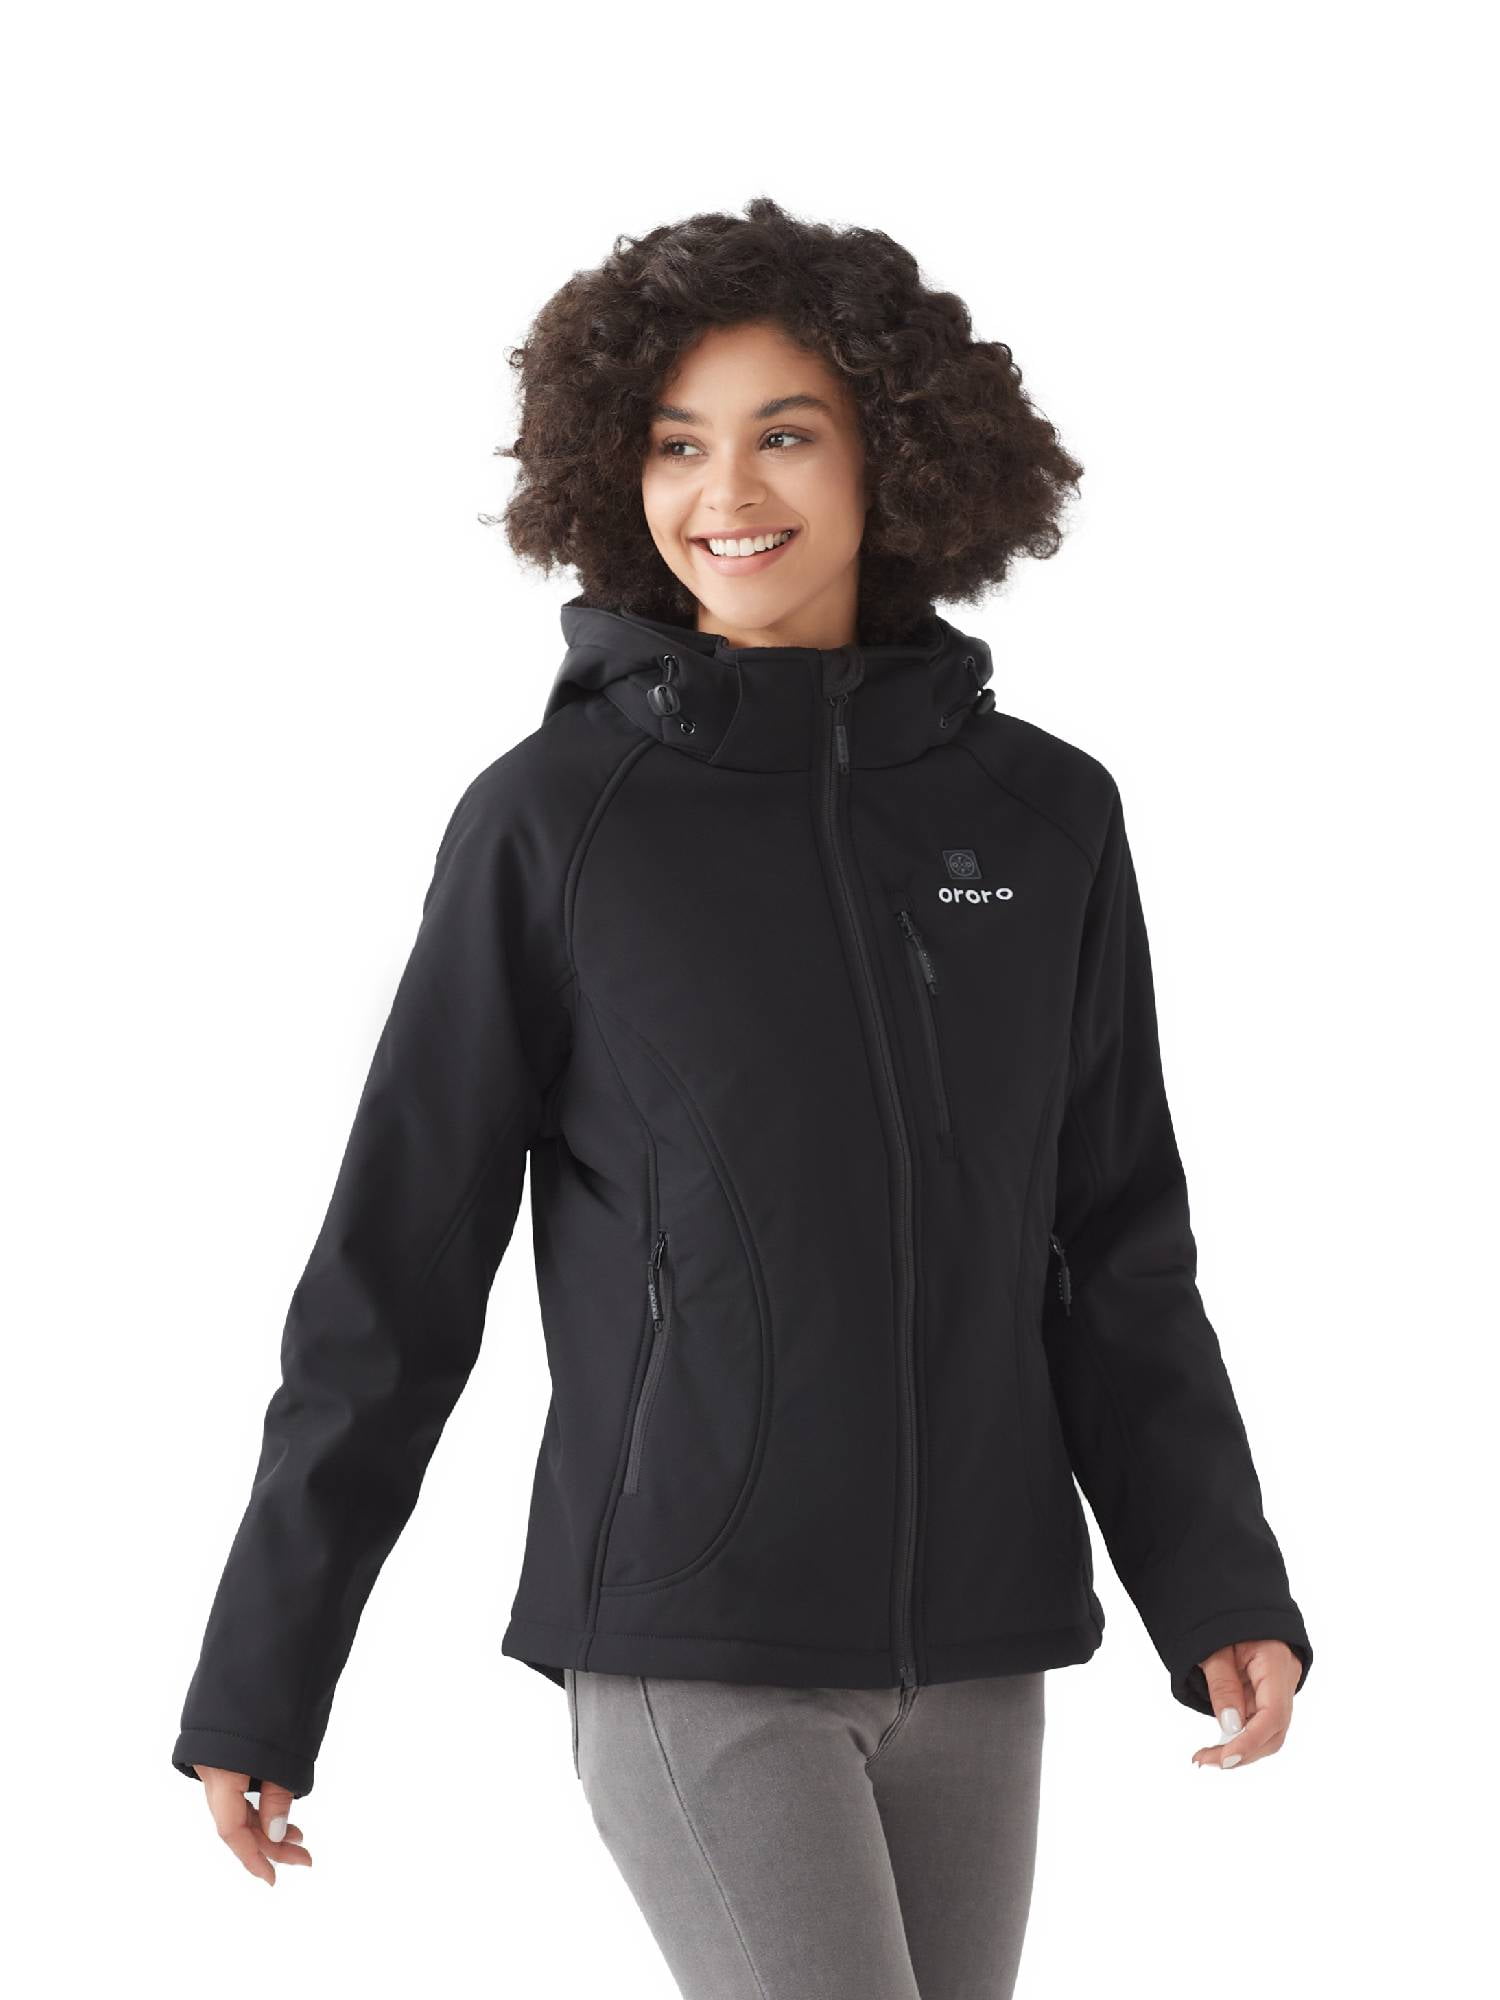 Ororo Battery Heated Women&s Heated Jacket, Size: Medium, Black